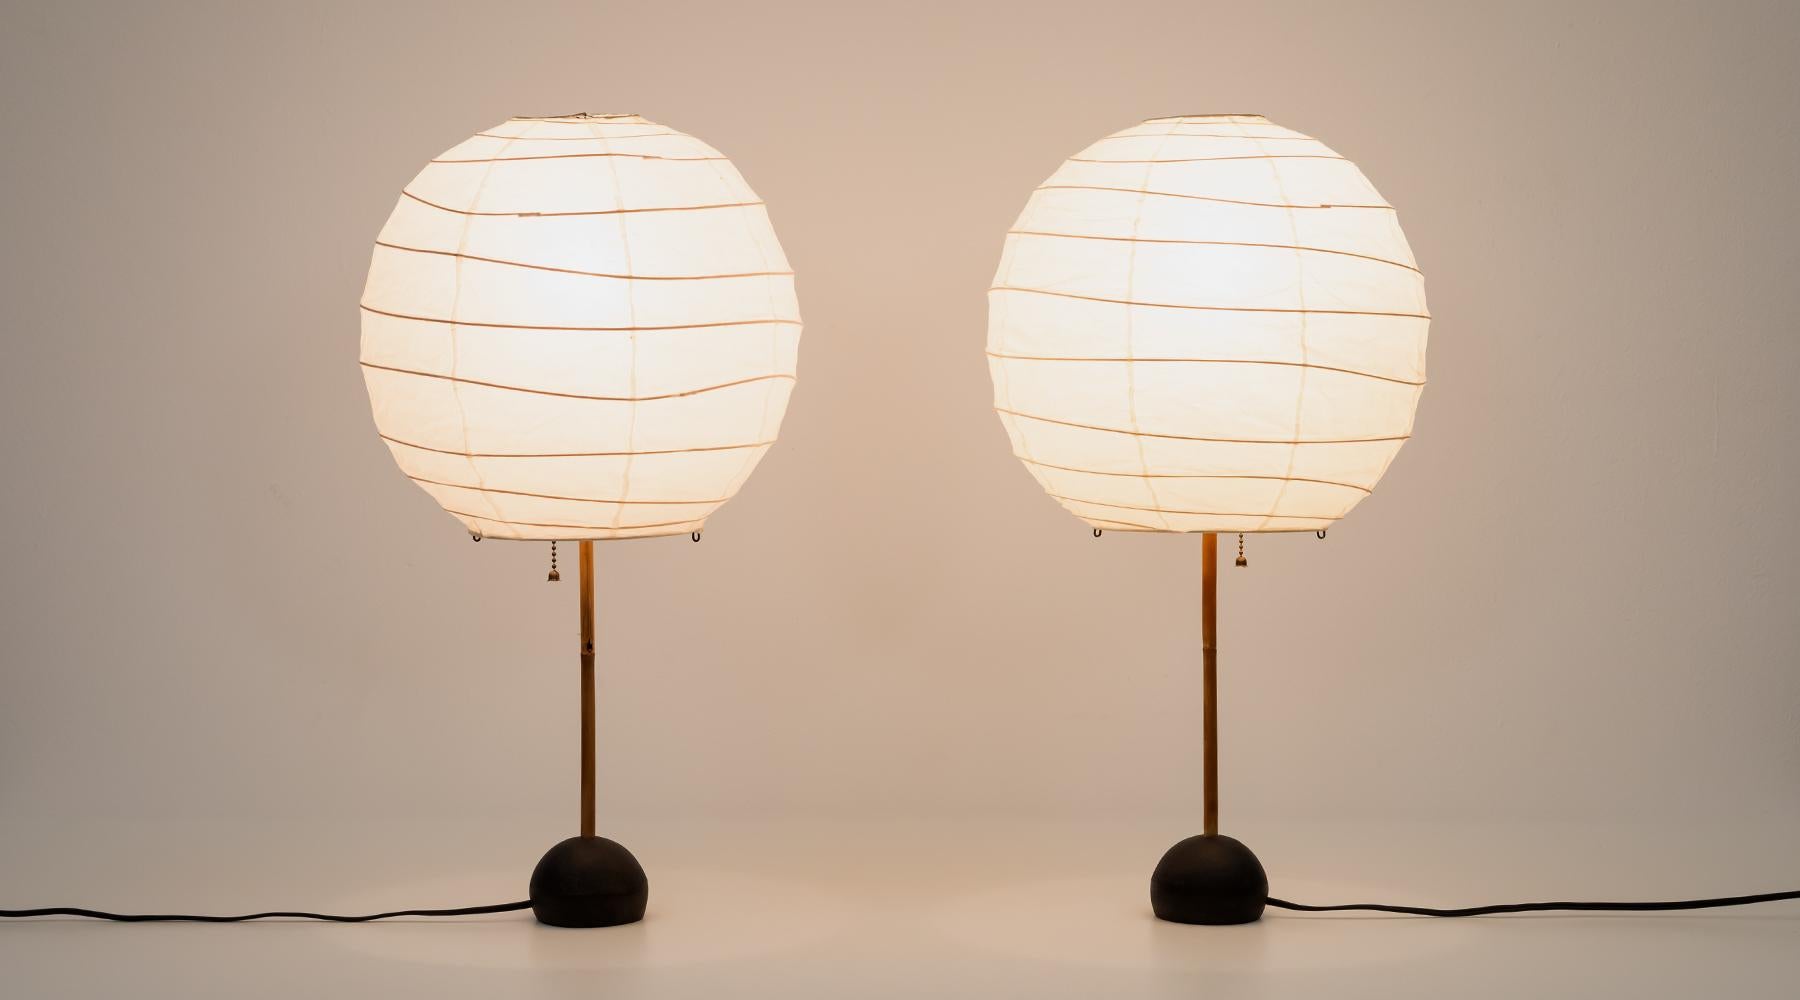 Table lamps, Akari, Sculptural light, Isamu Noguchi for Ozeki, USA, 1952.

Two early example of Isamu Noguchi´s 